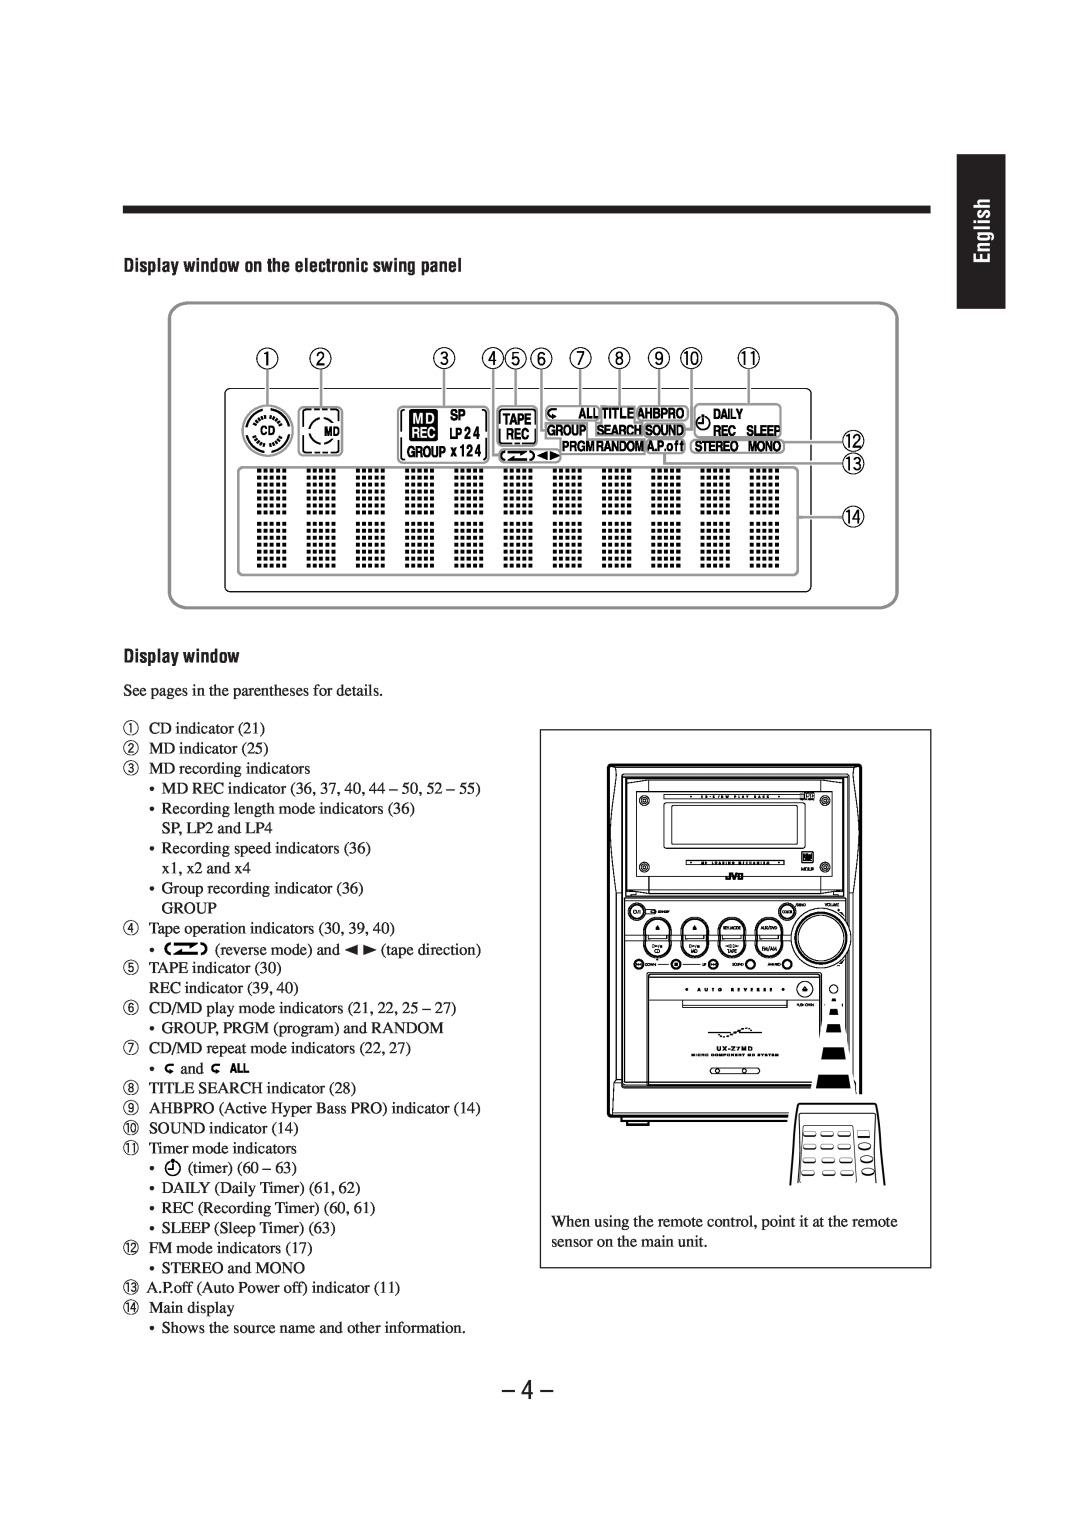 JVC CA-UXZ7MD, LVT0900-004A manual 1 2 3 456 7 8 9 = ~, English, Display window on the electronic swing panel 